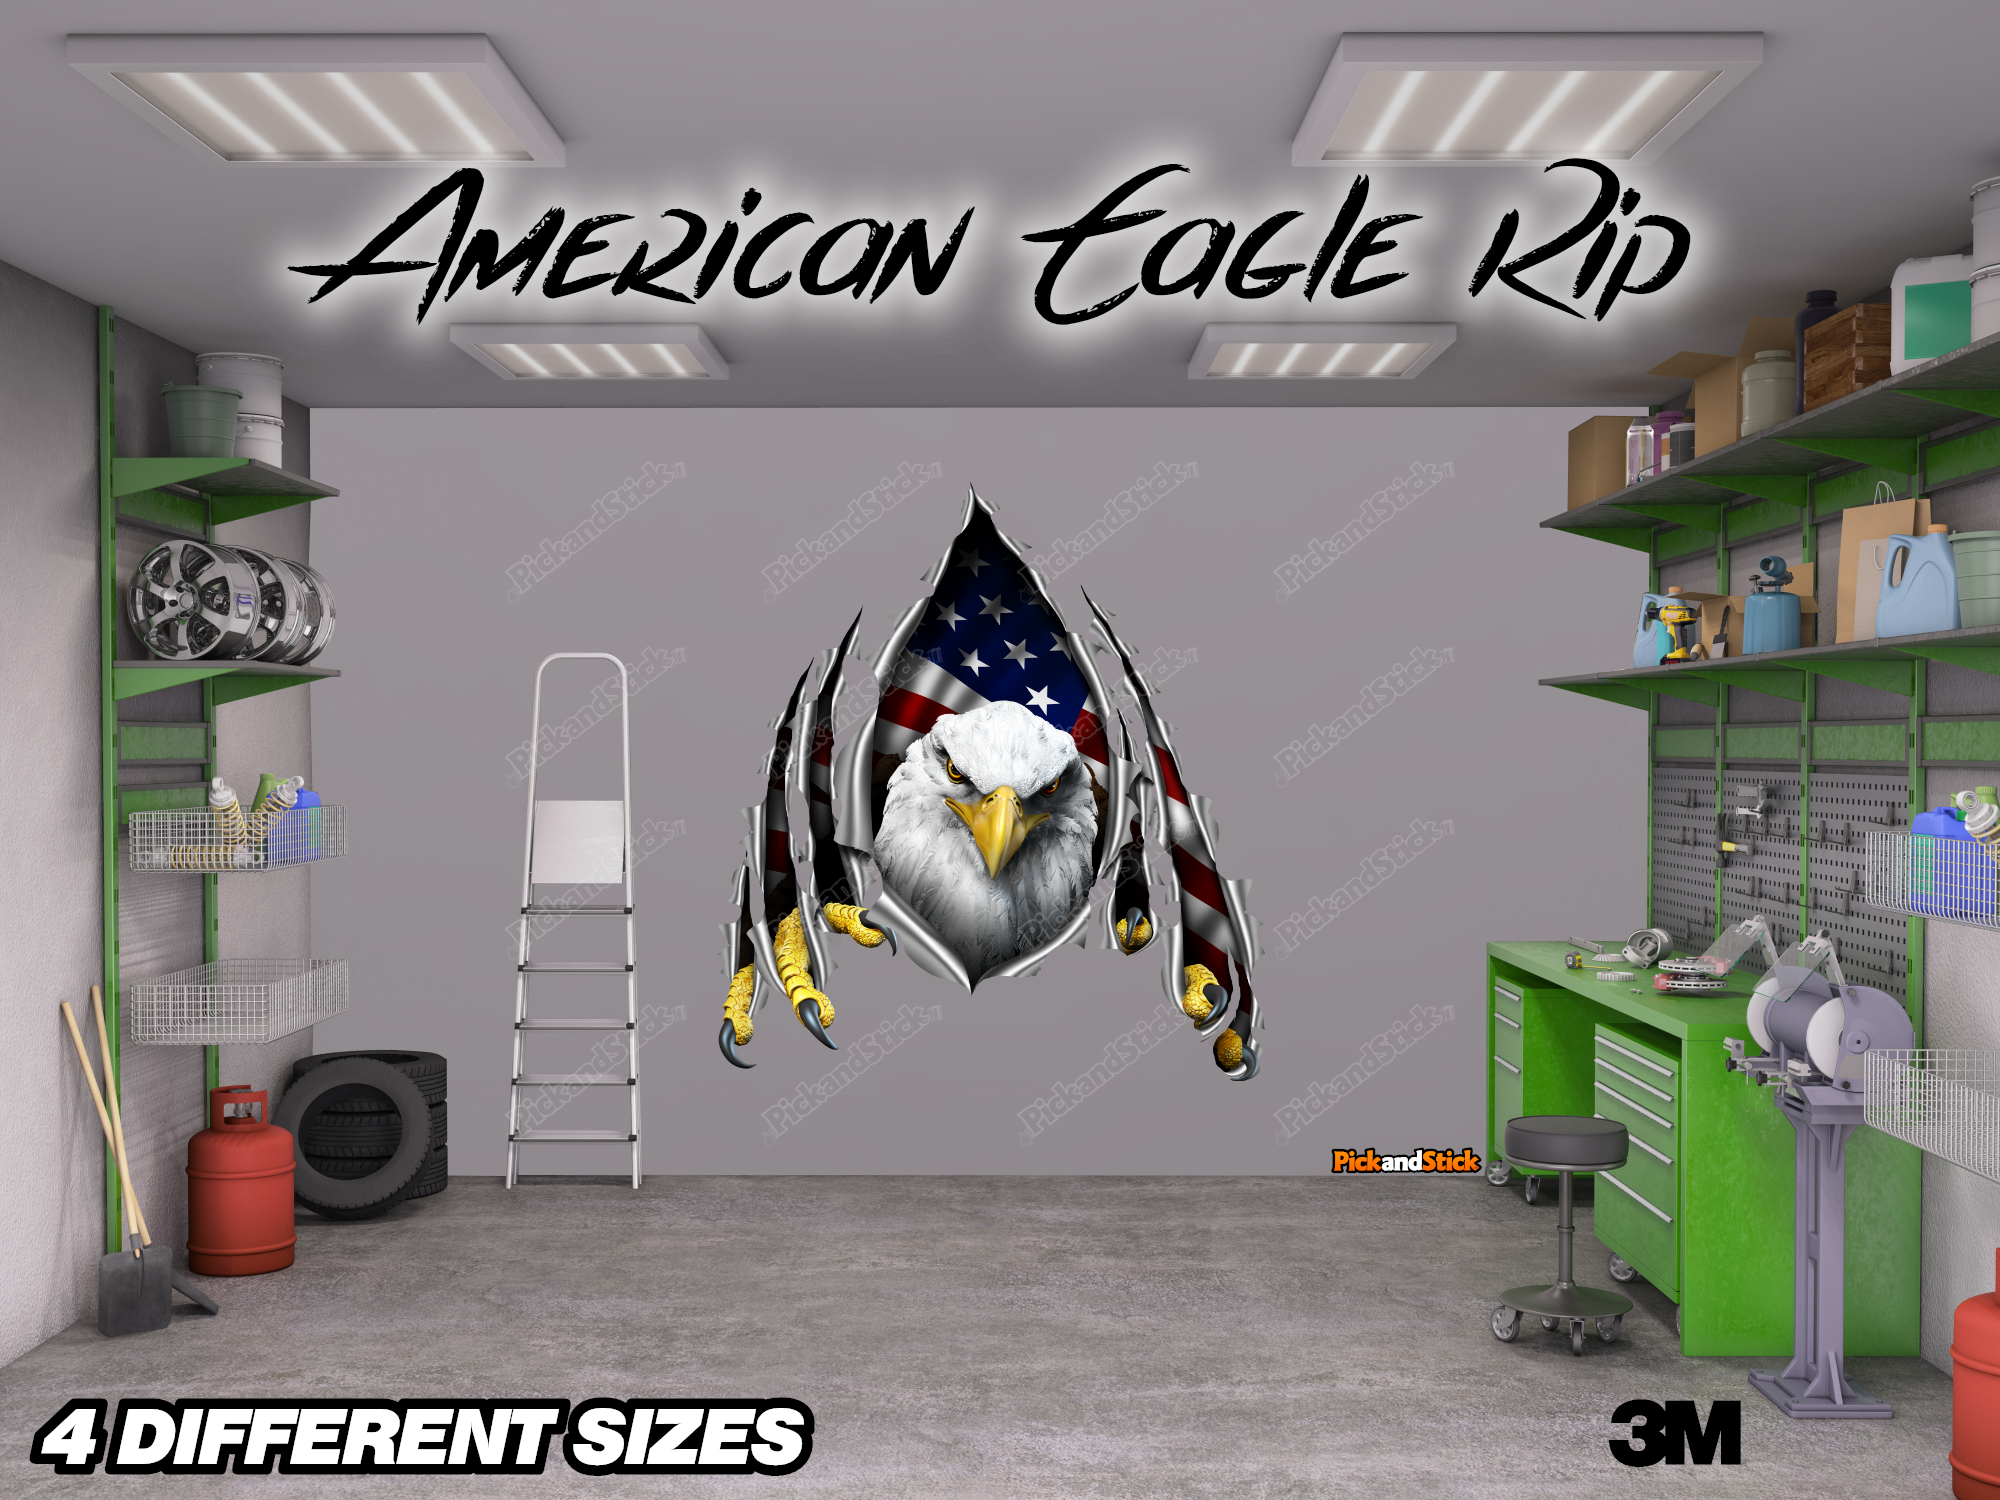 American Eagle Rip Wall Graphic - PickandStickcom